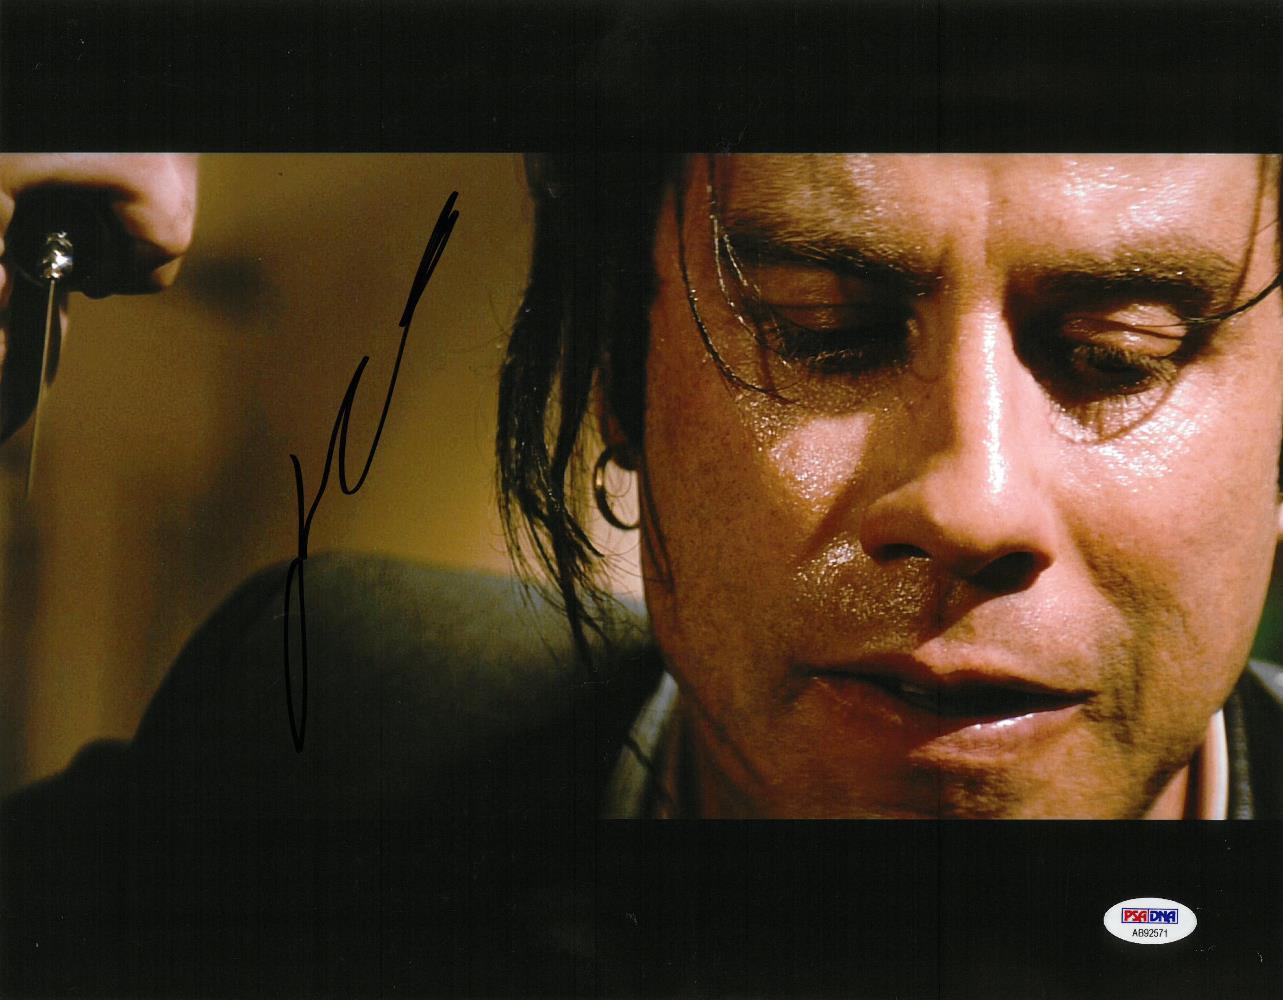 John Travolta Signed Pulp Fiction Autographed 11x14 Photo Poster painting PSA/DNA #AB92571